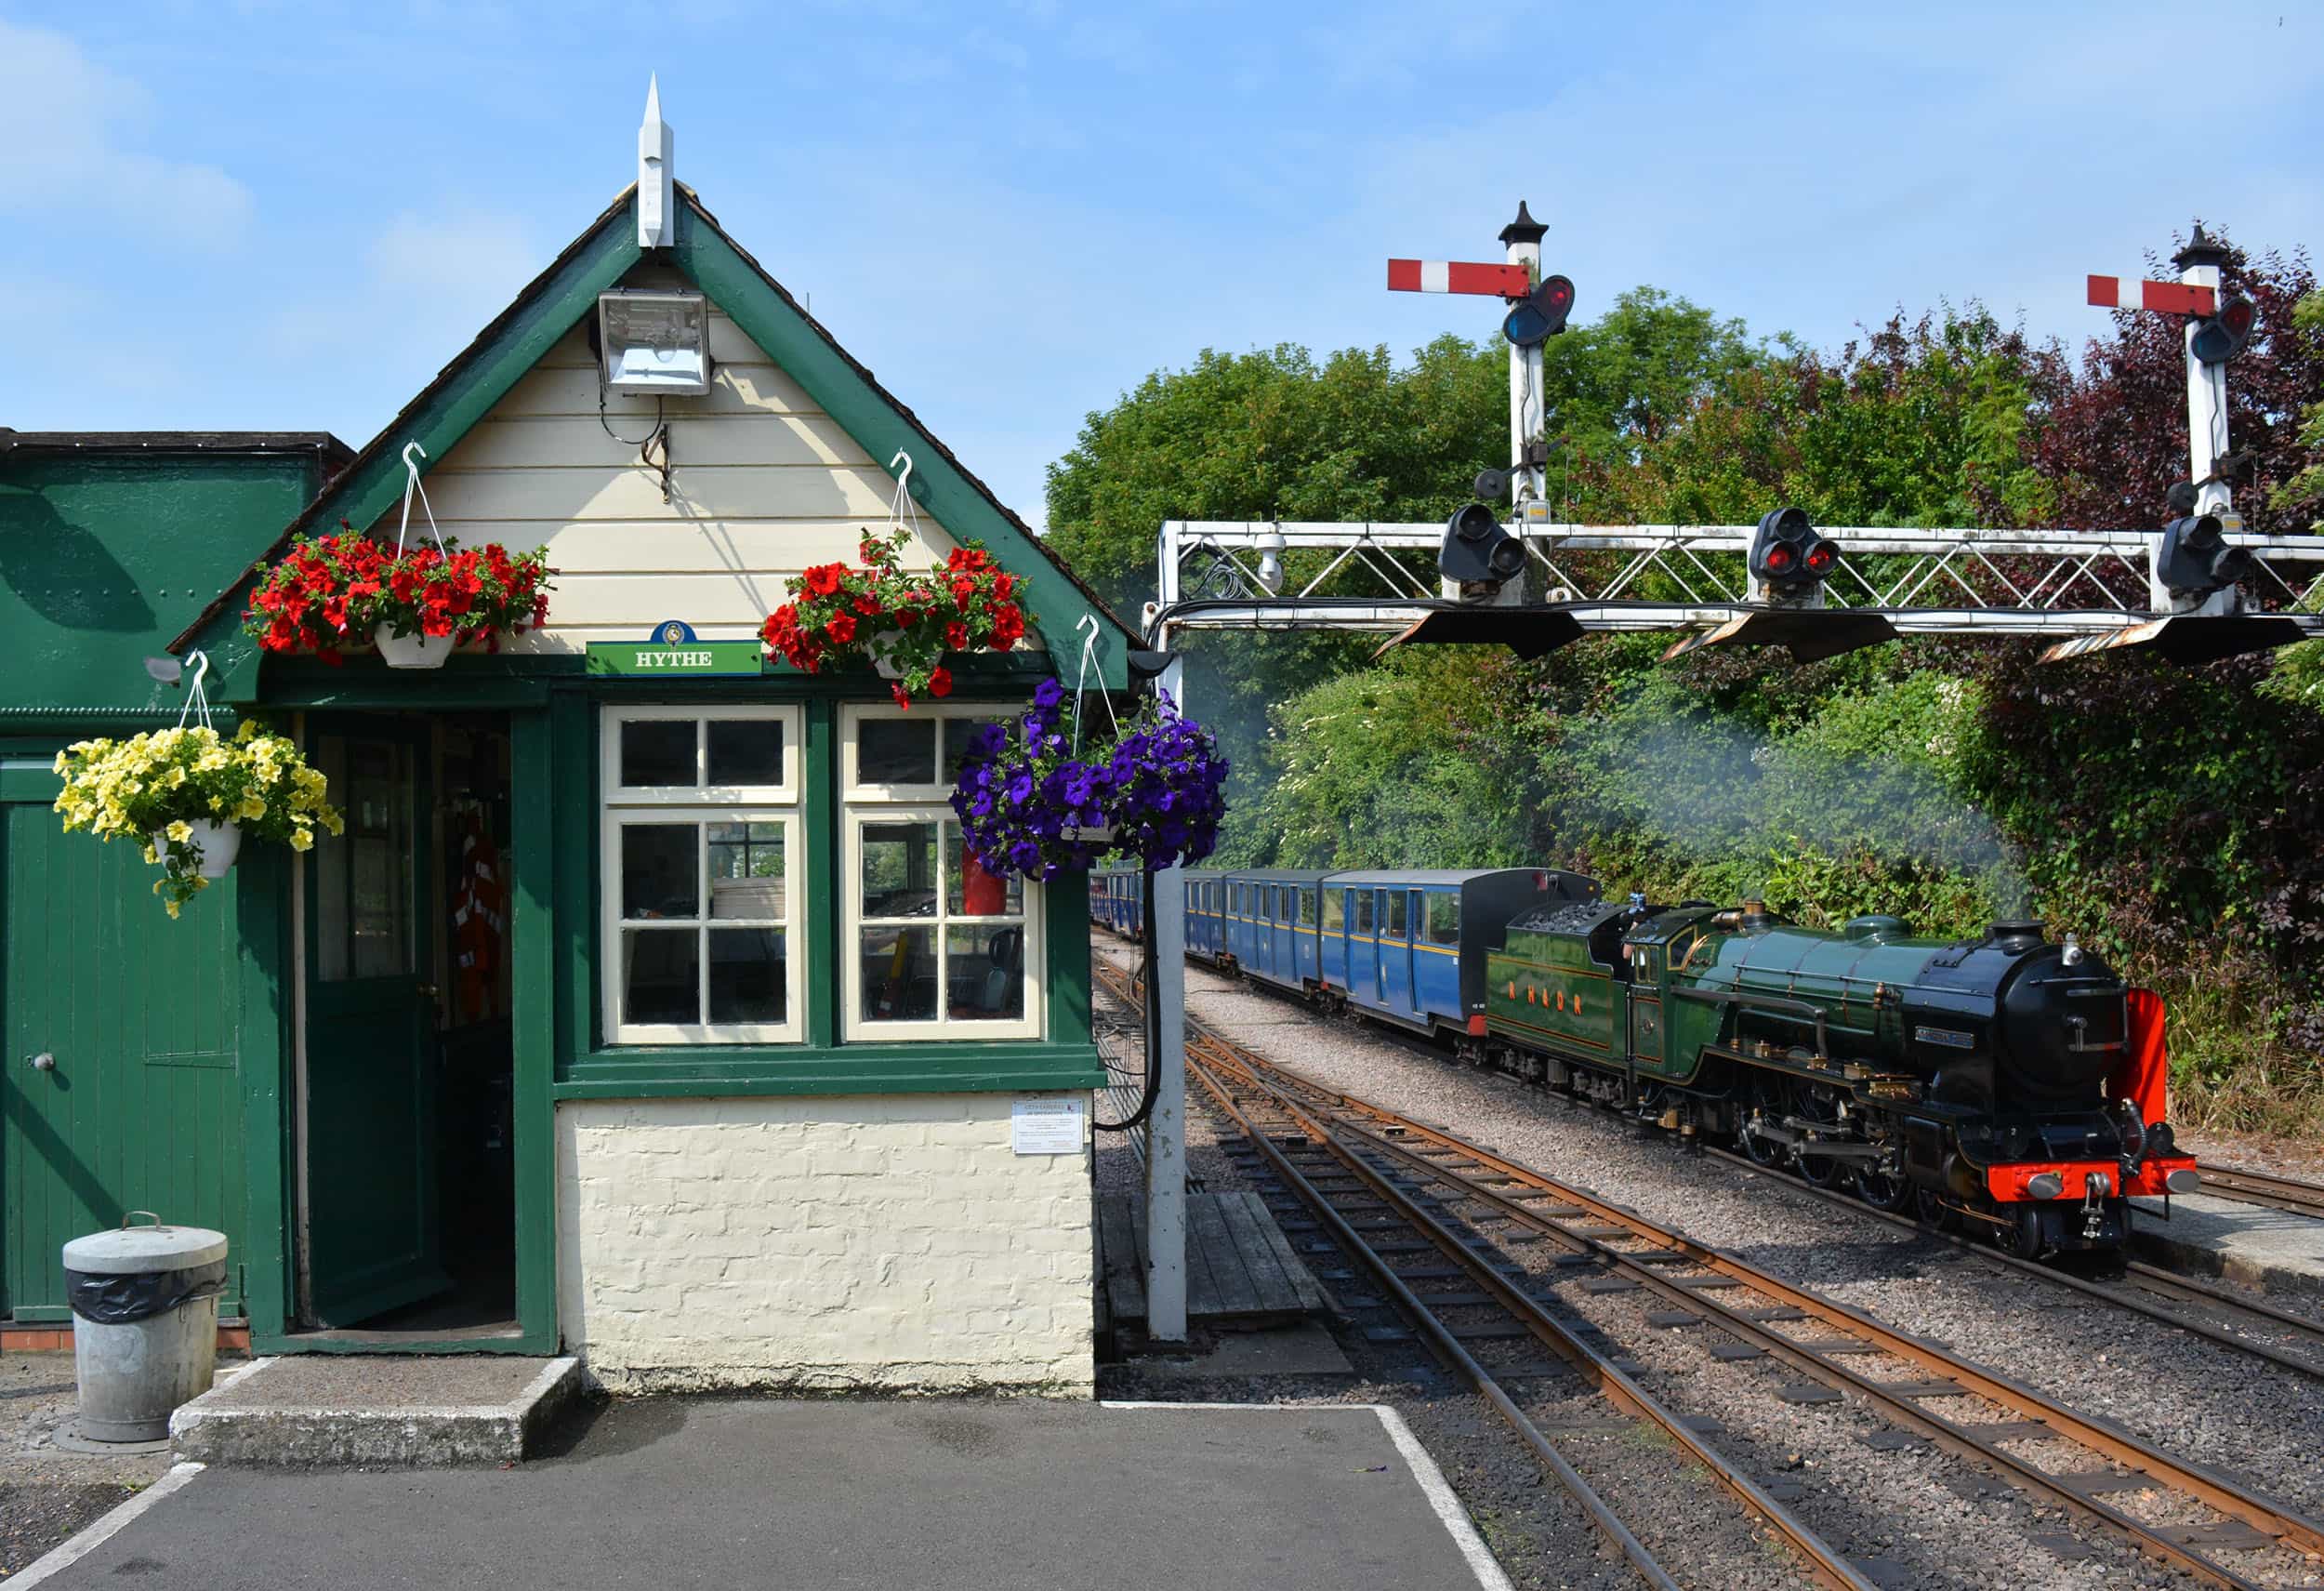 Hythe Station at Romney, Hythe & Dymchurch Railway